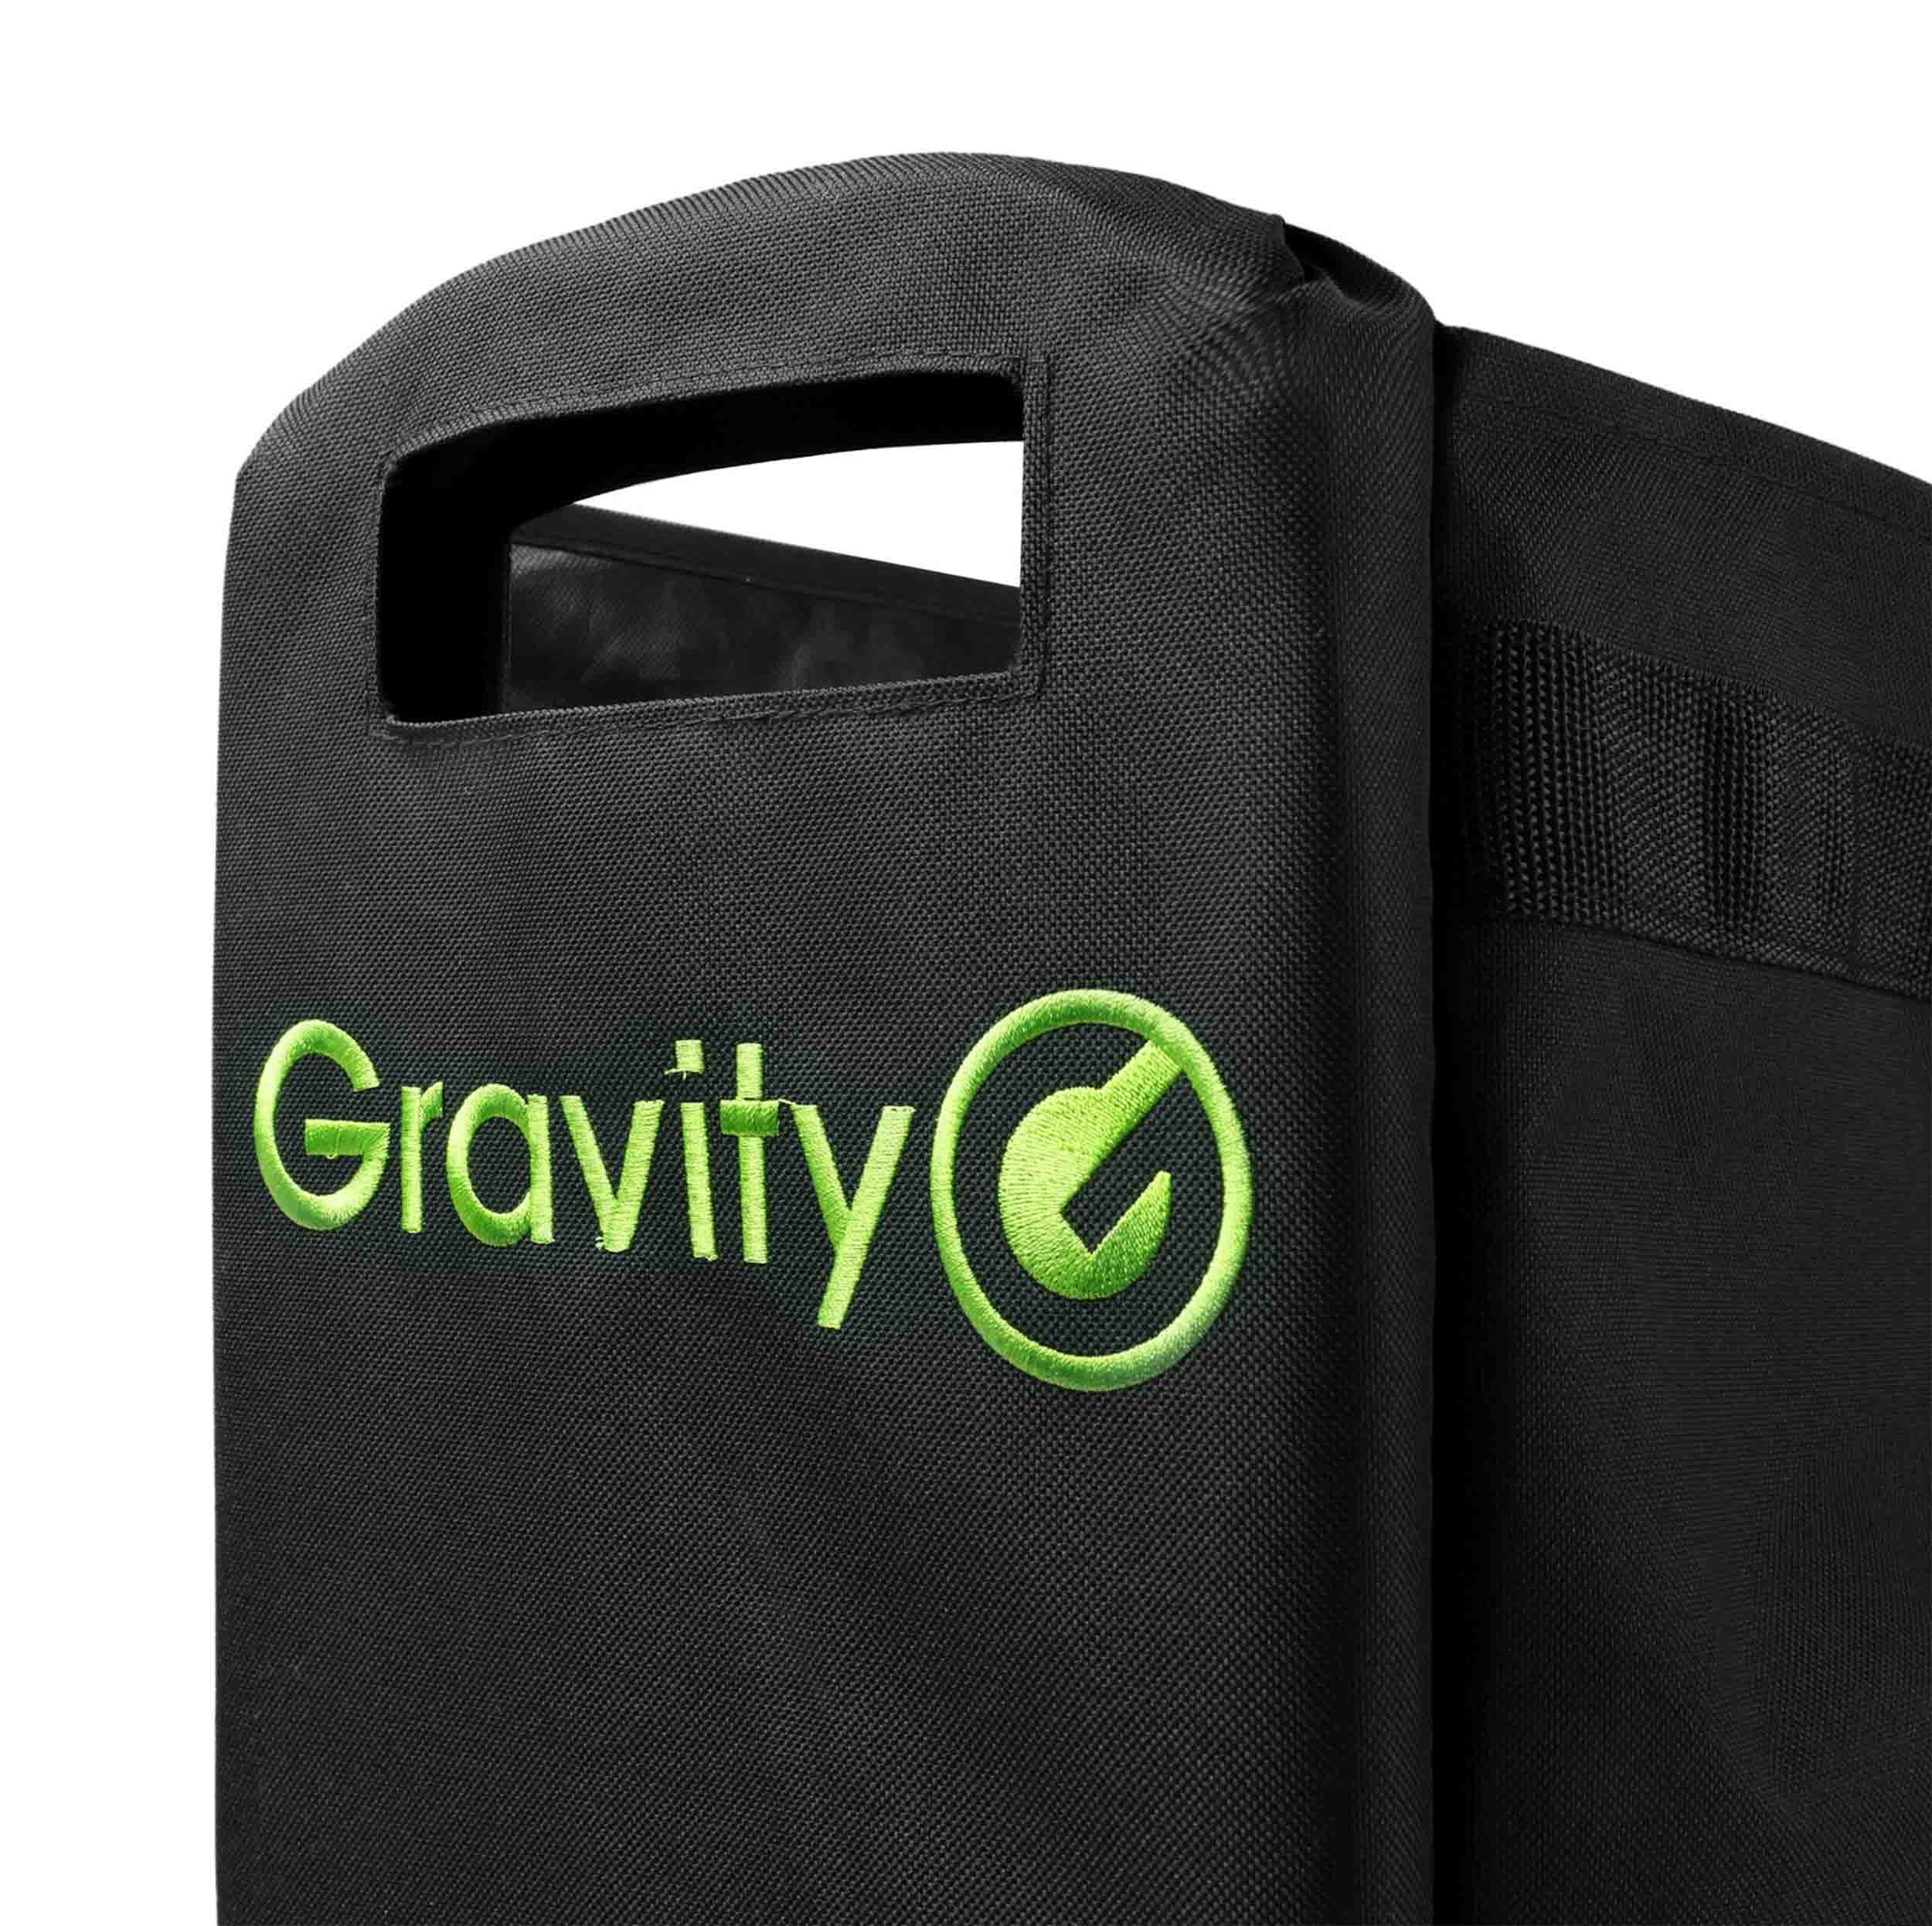 Gravity BG CART M 1, Wagon Bag for CART M 01 B by Gravity